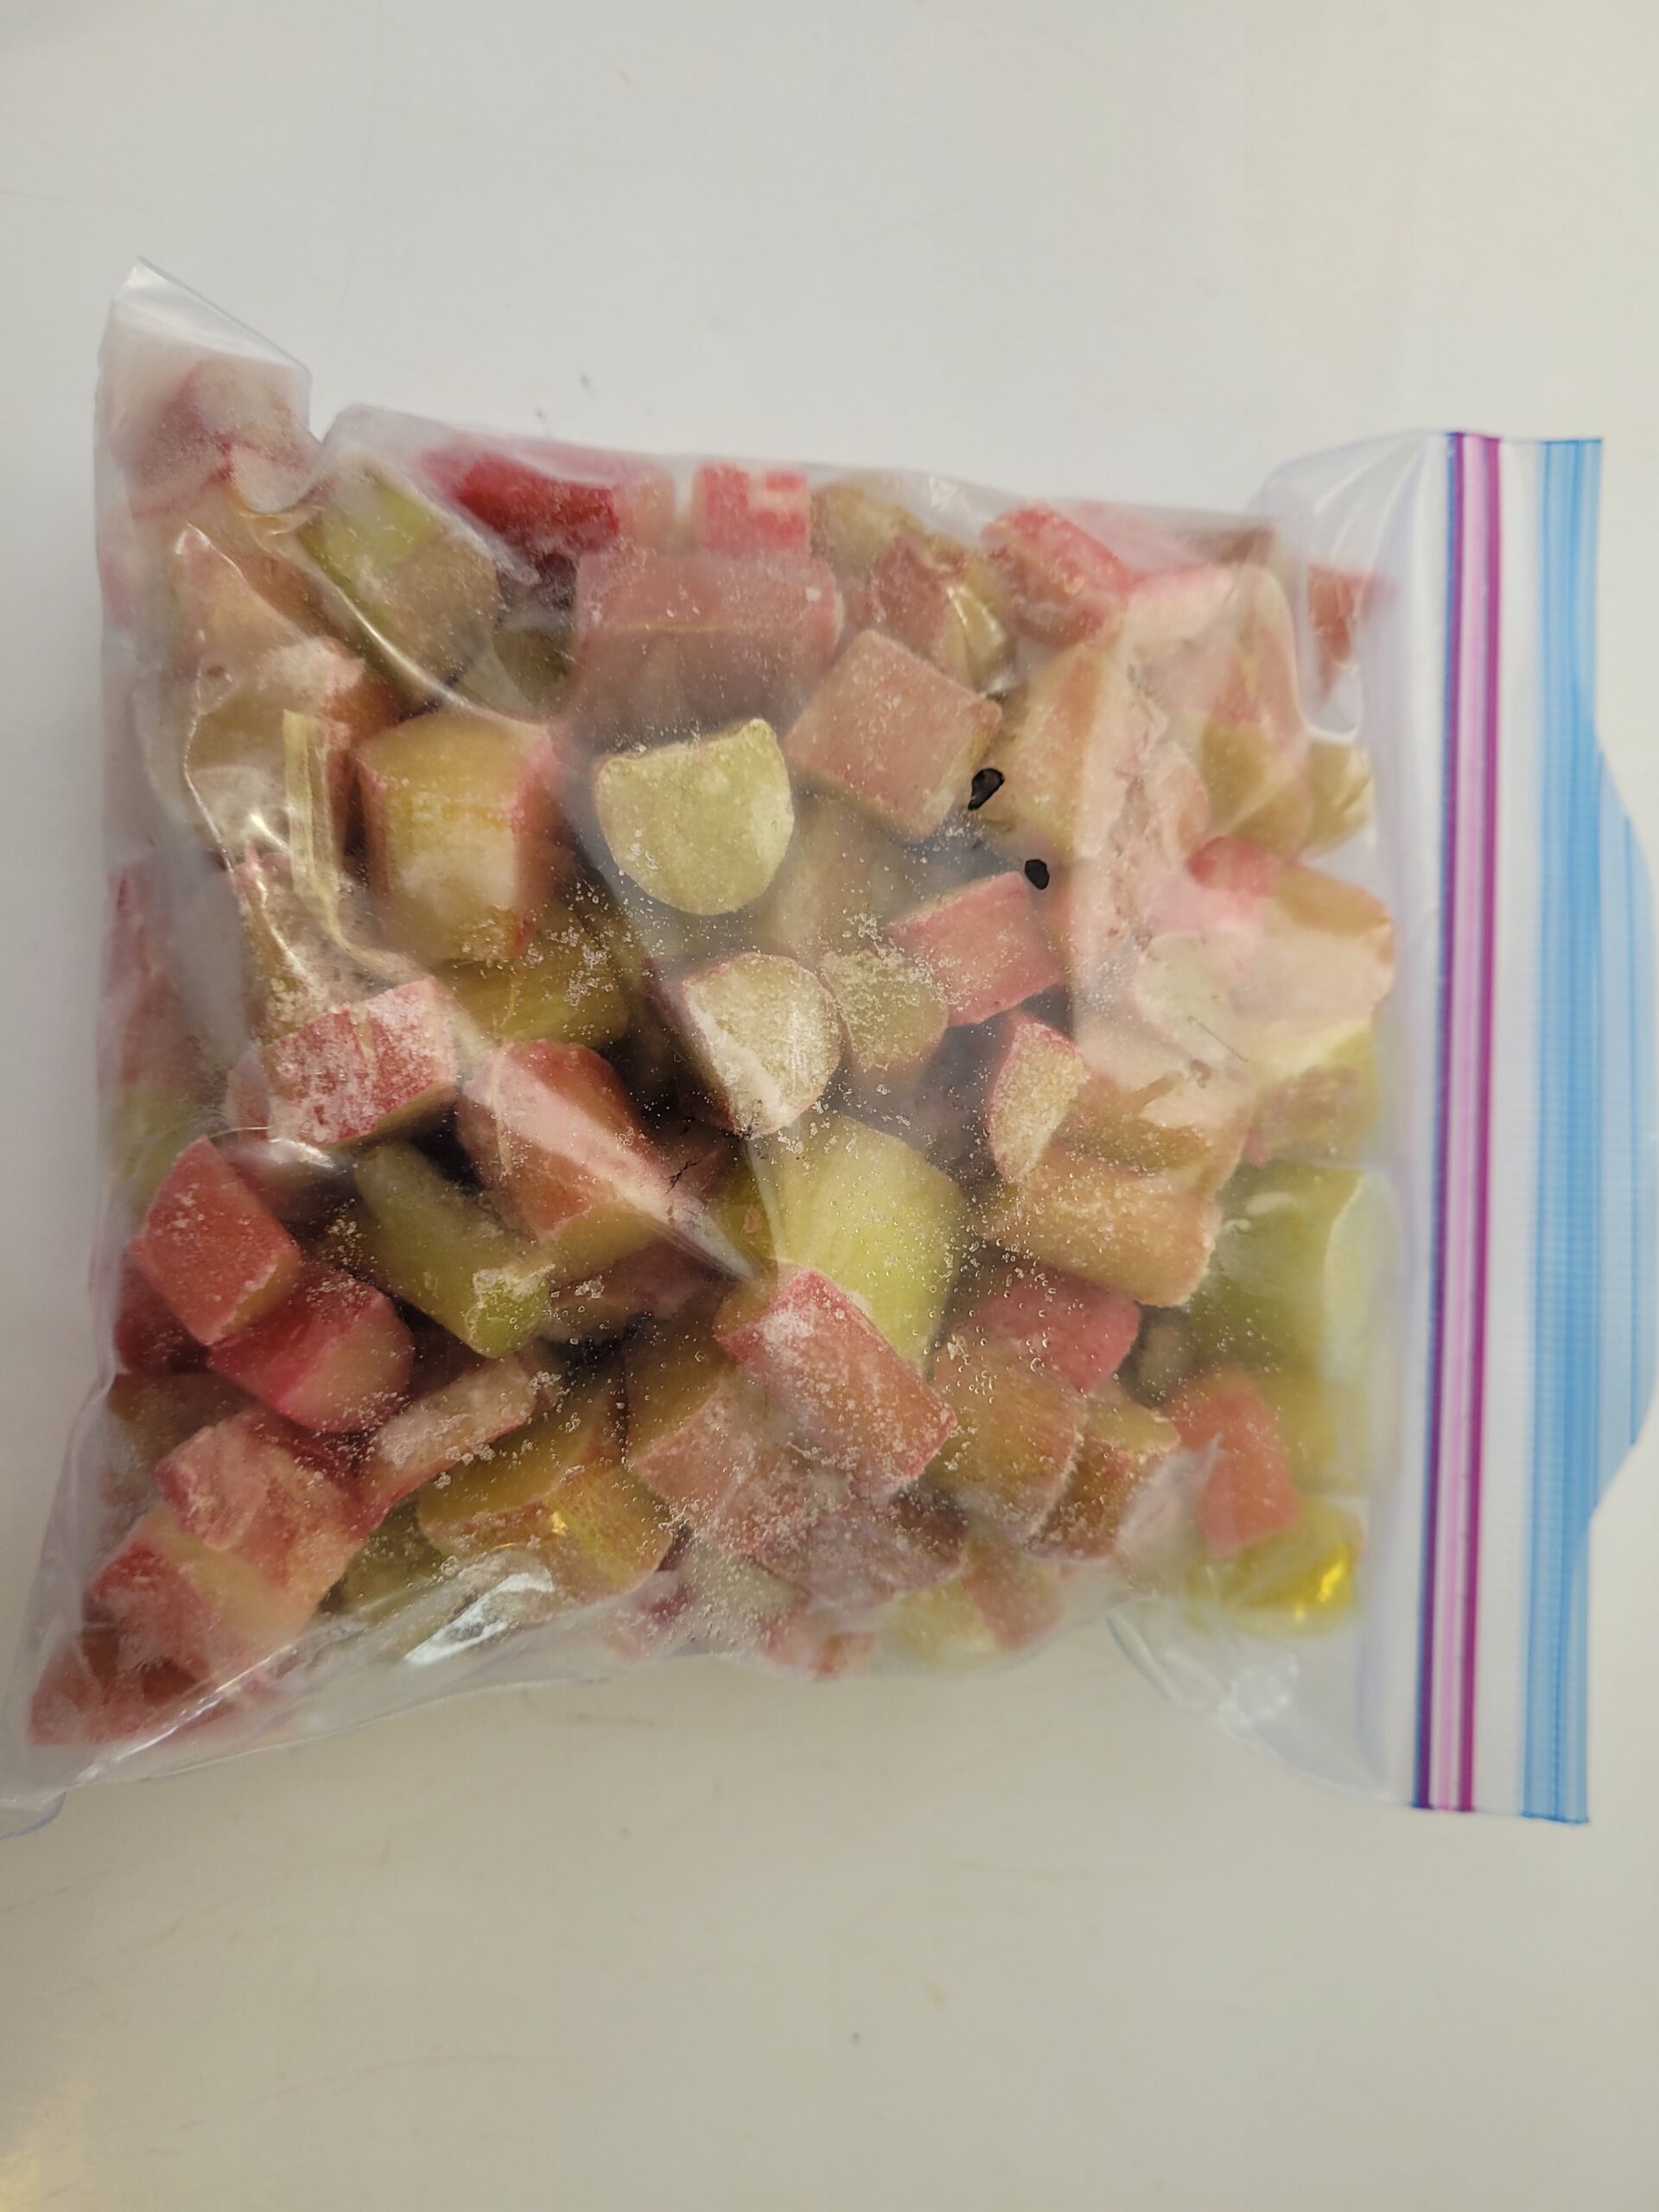 Rhubarb – frozen 1 quart bag, approx. 4 cups – All Good Organics Farm Store